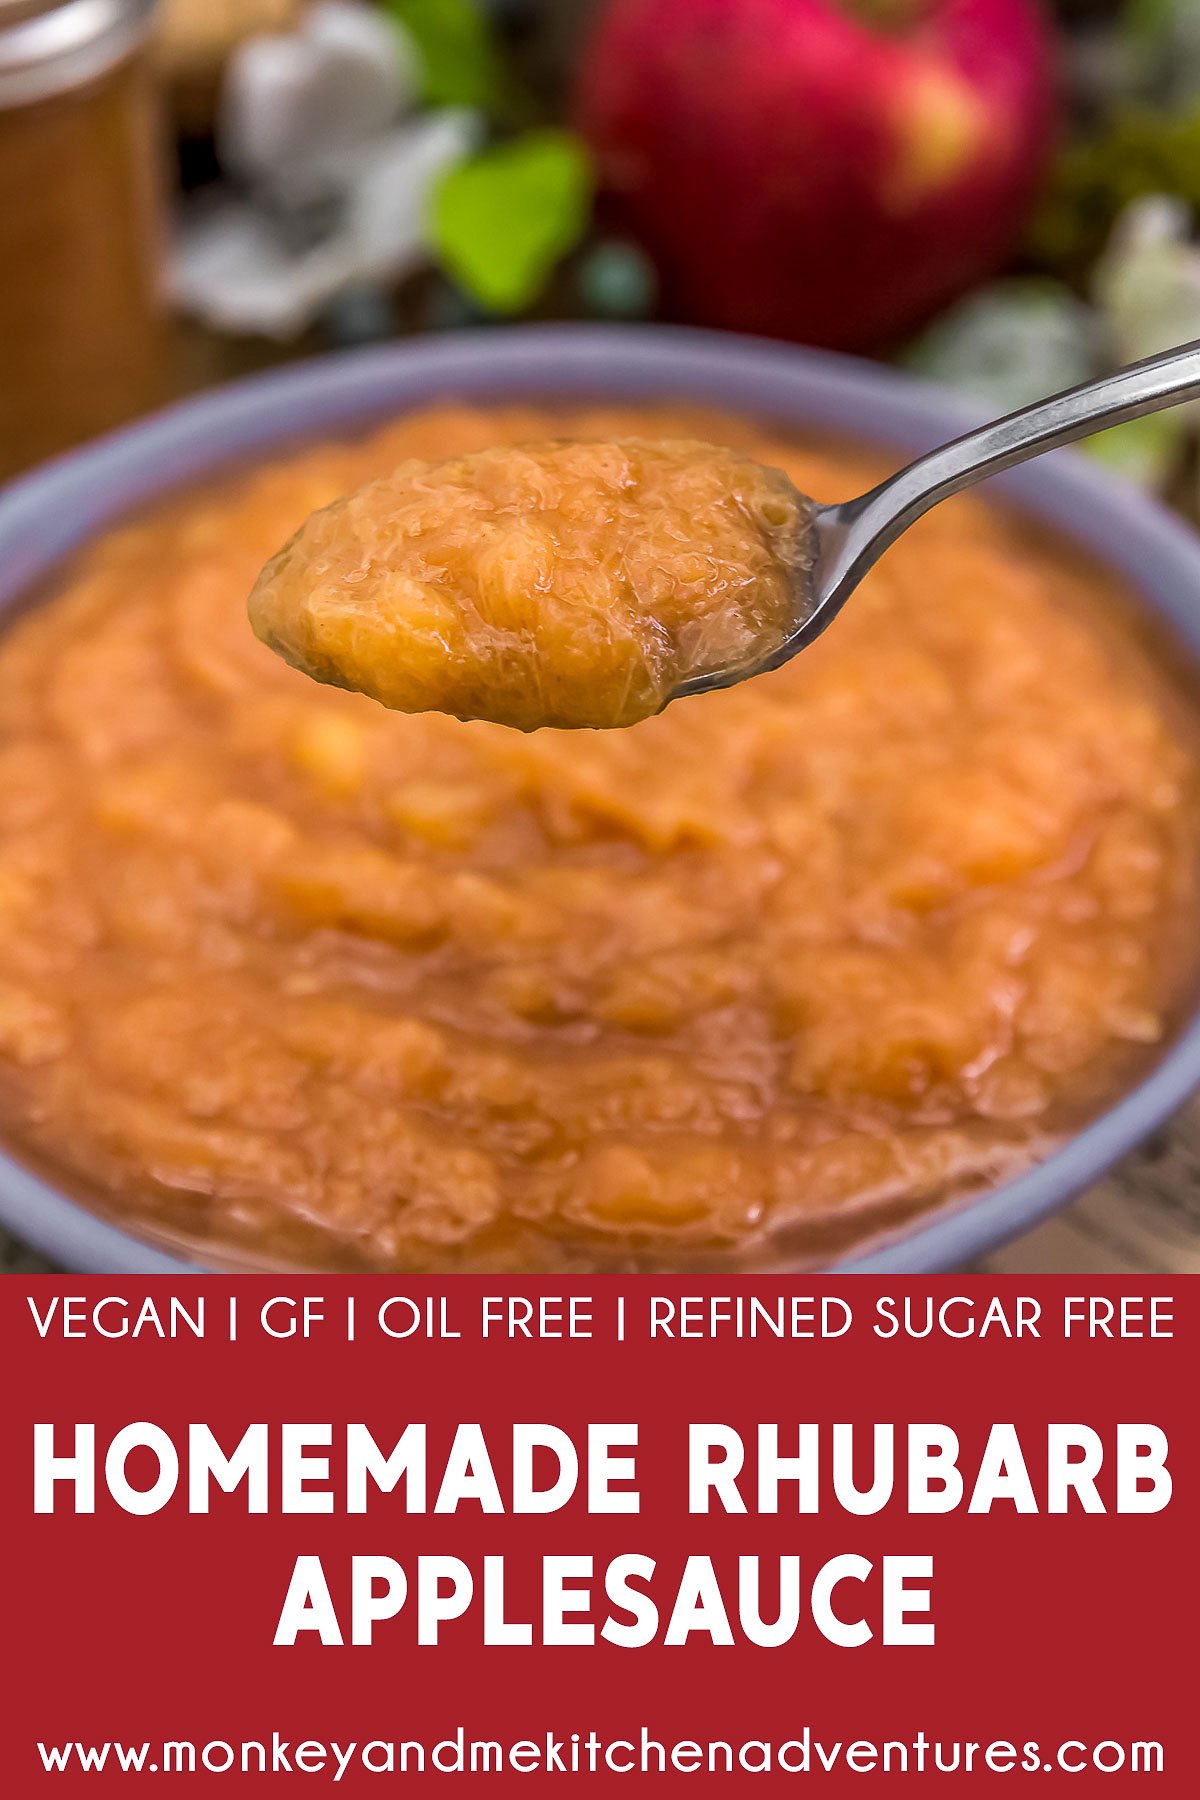 Homemade Rhubarb Applesauce with text description